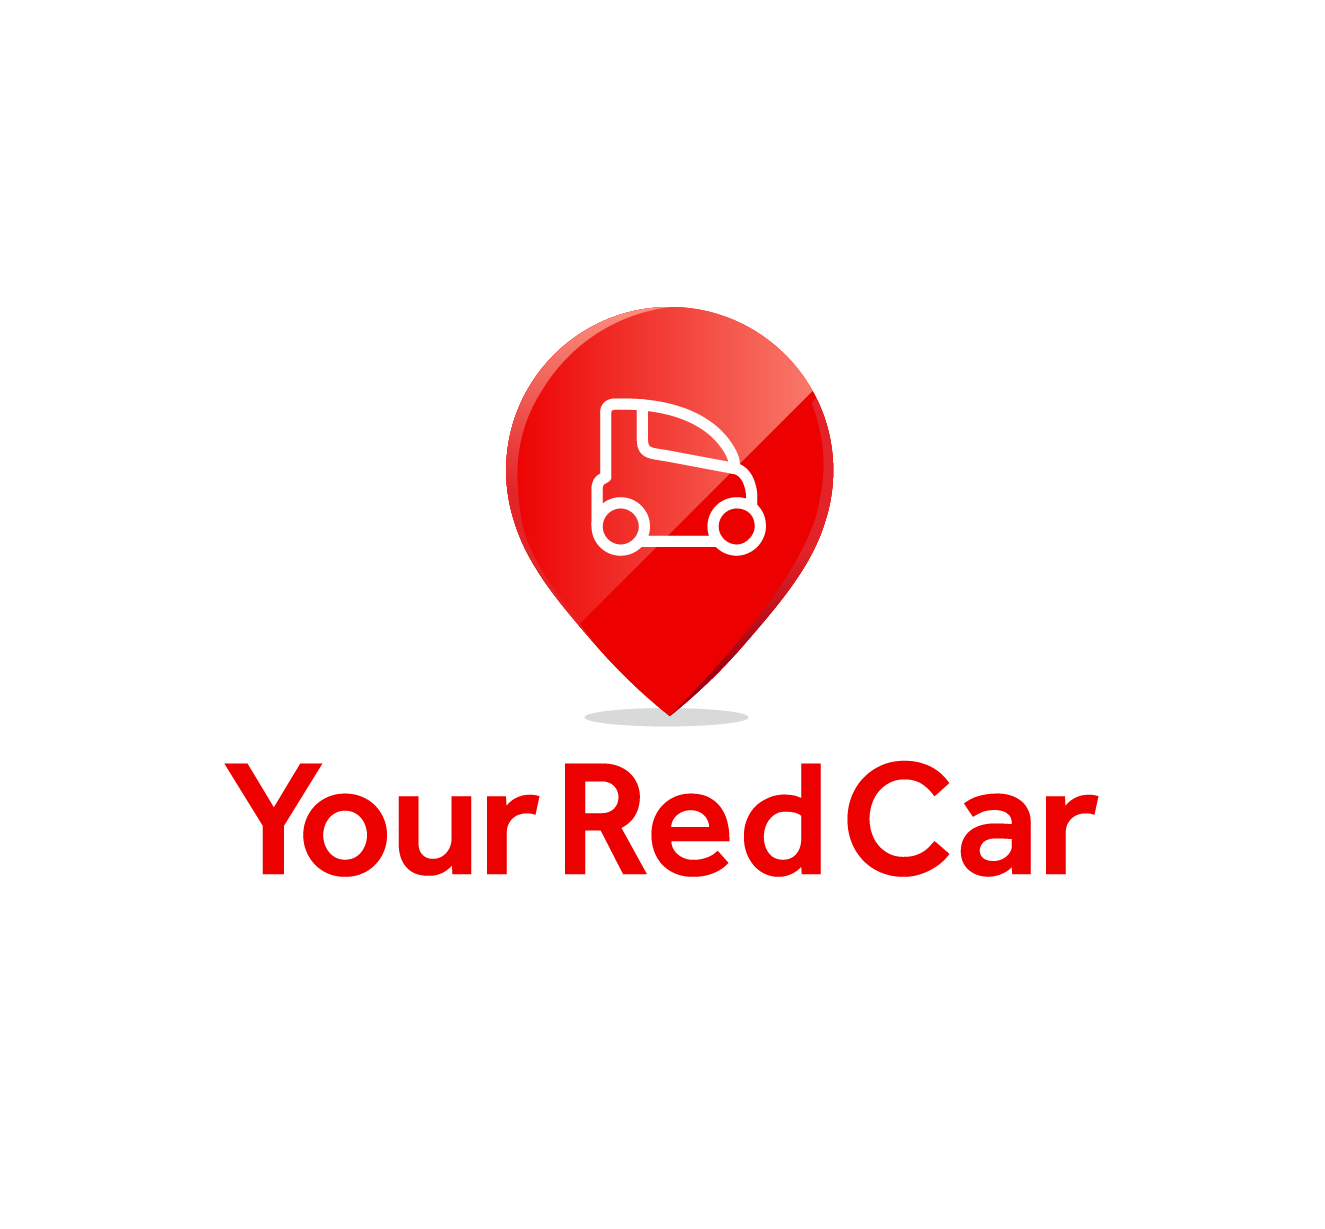 YourRedCar Logo